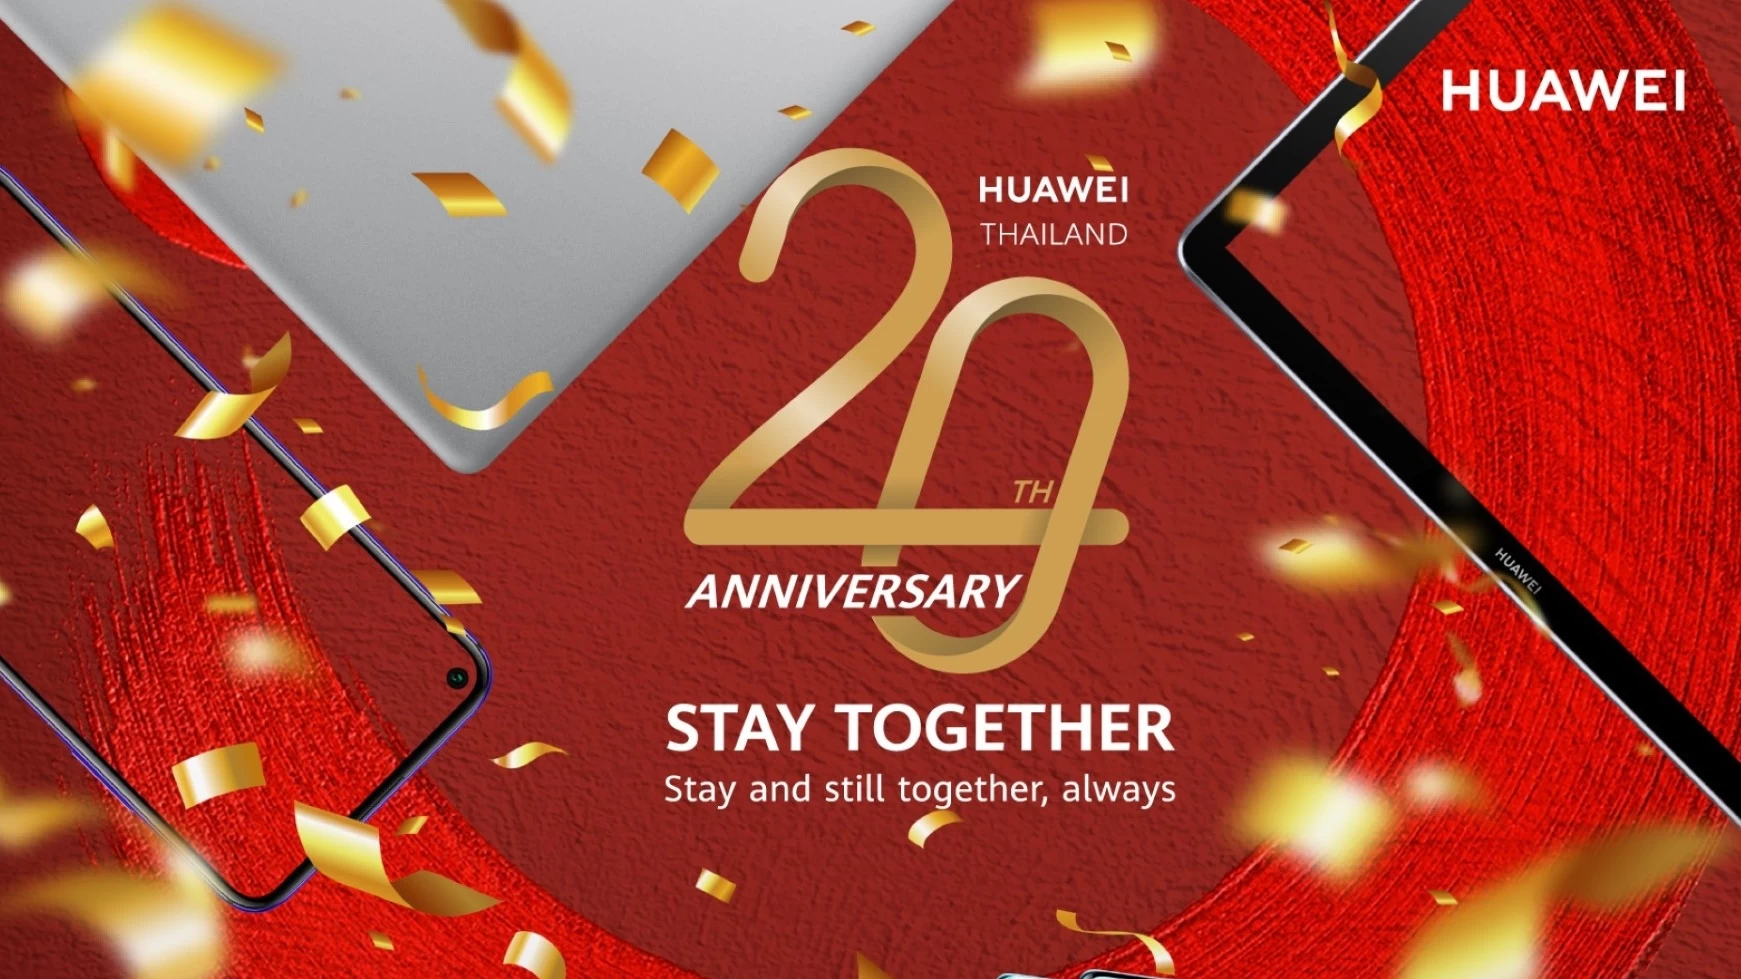 Huawei Thailand 20th Anniversary | Huawei Experience Store | หัวเว่ยจัดแคมเปญ “Huawei Thailand 20th Anniversary” ฉลองครบรอบ 20 ปี จัดโปรแทนคำขอบคุณ